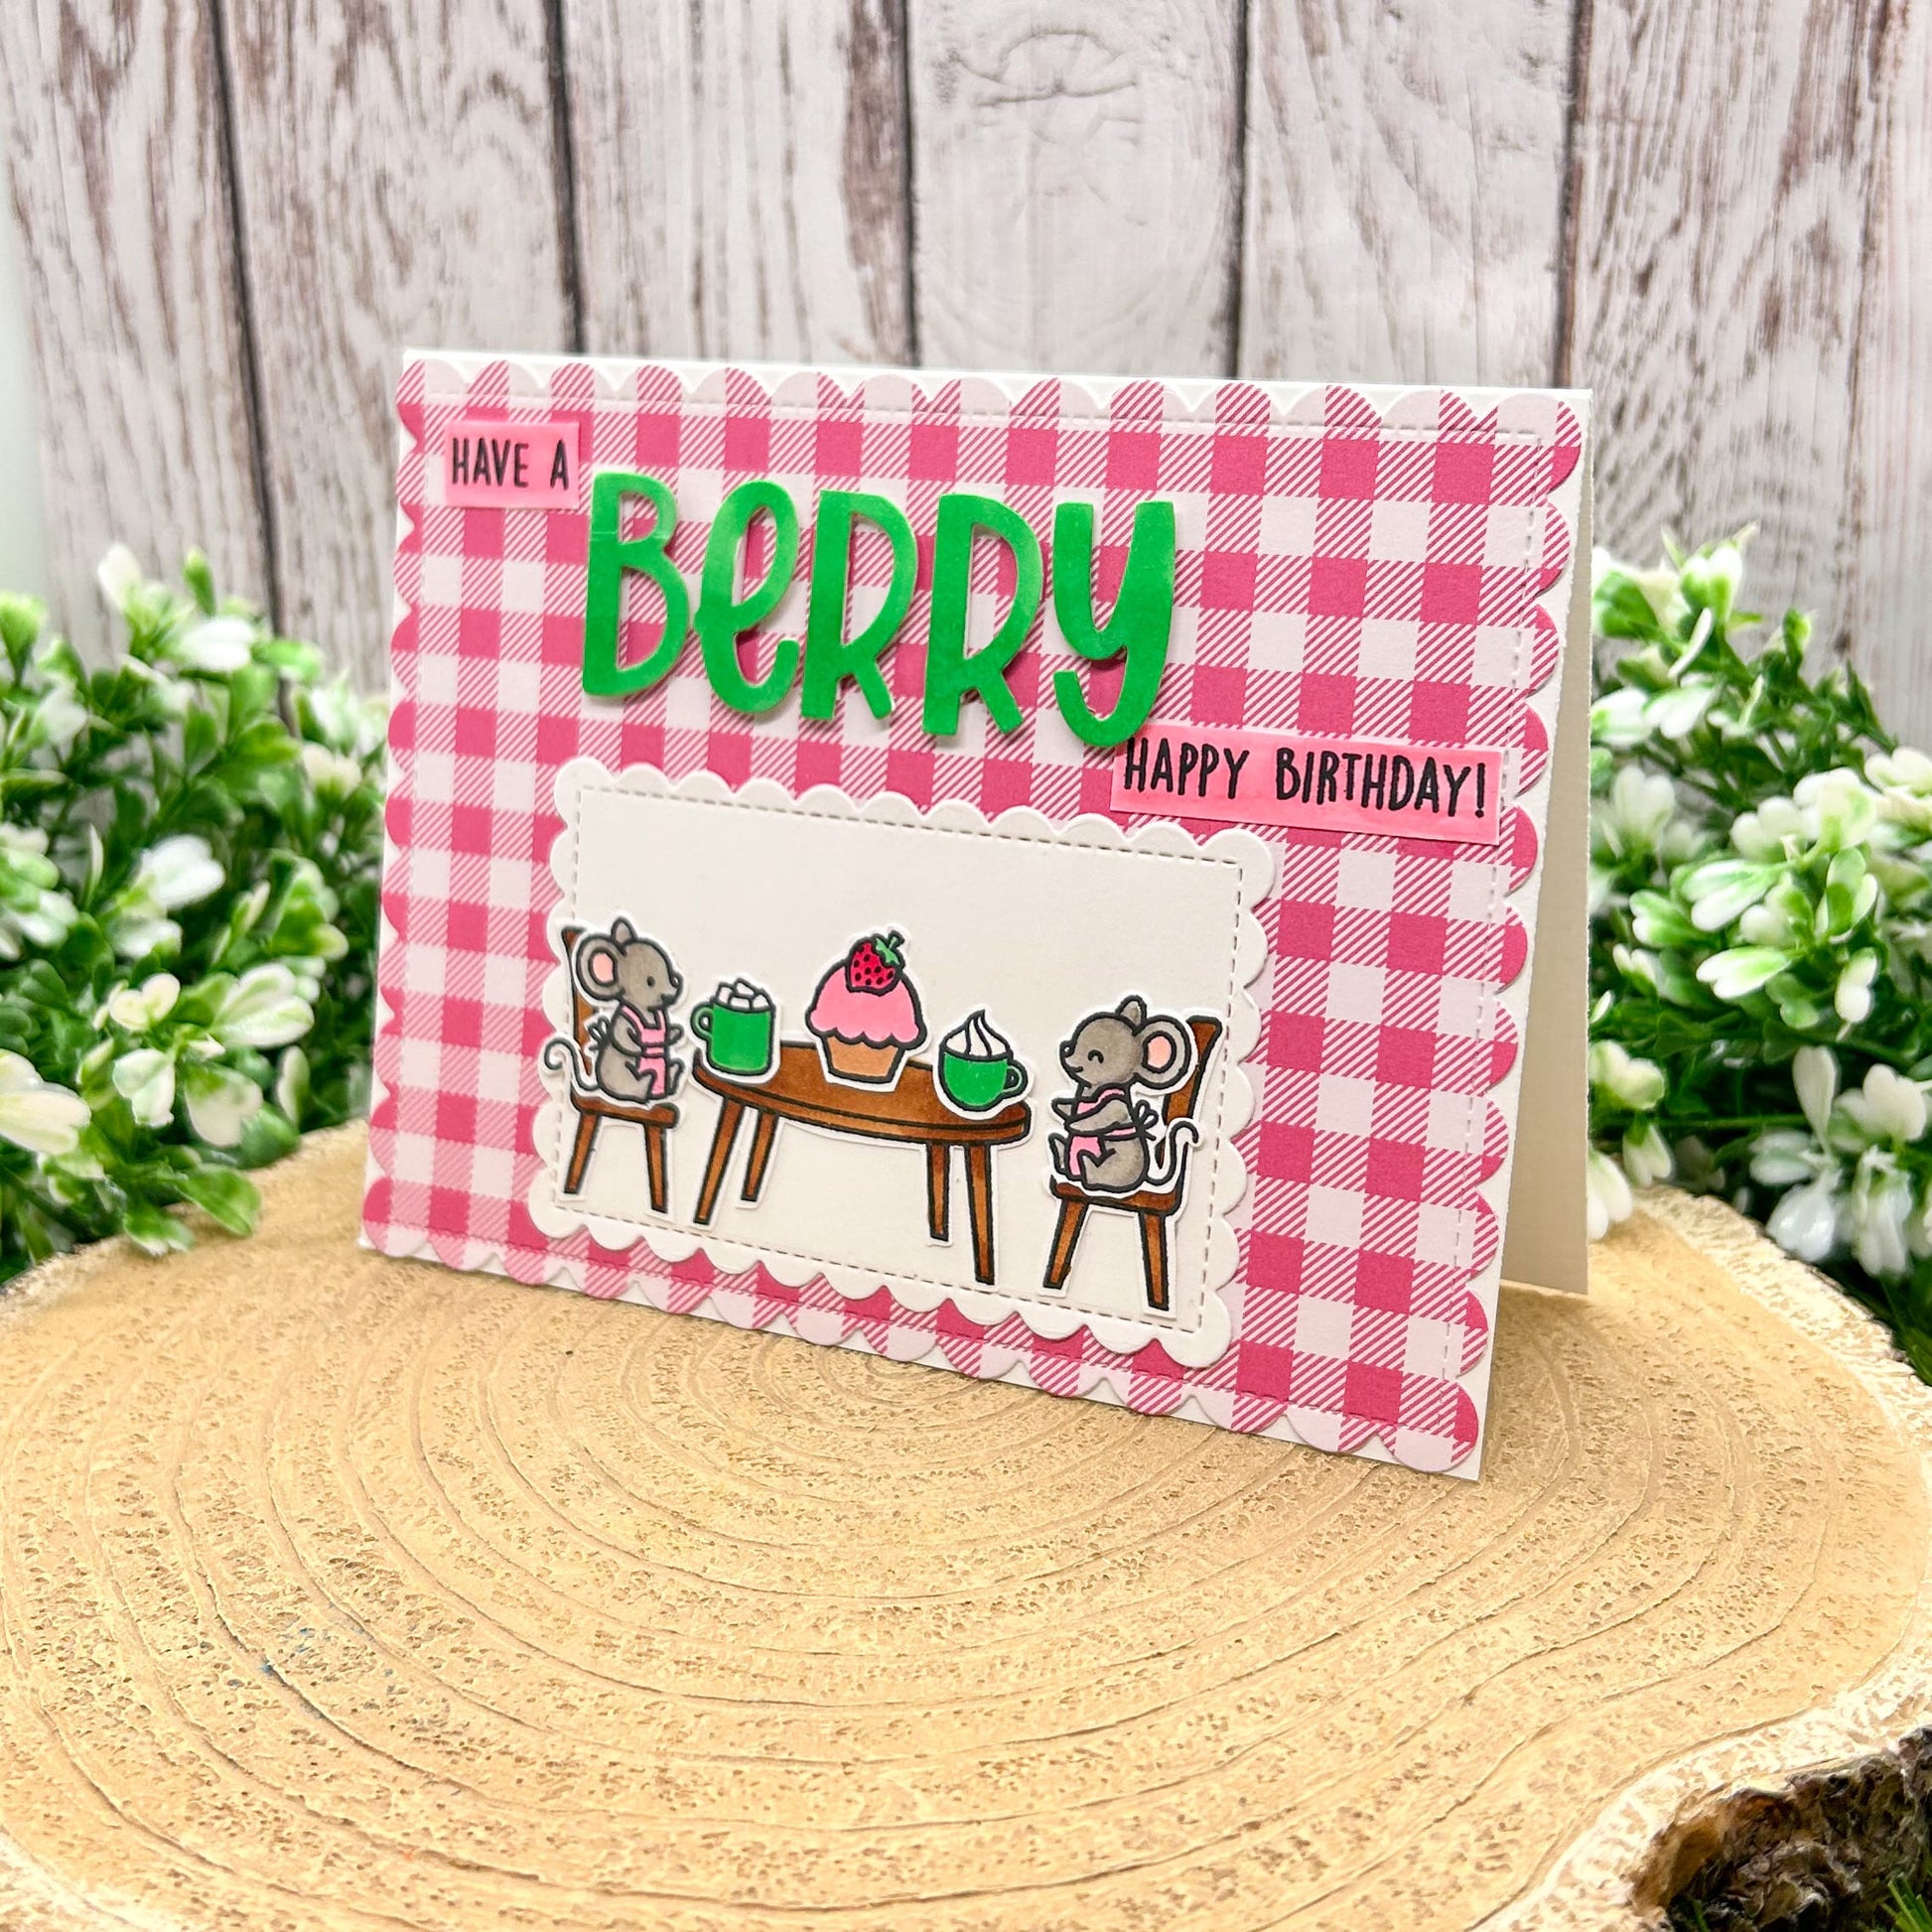 Have A Berry Happy Birthday Handmade Card-1